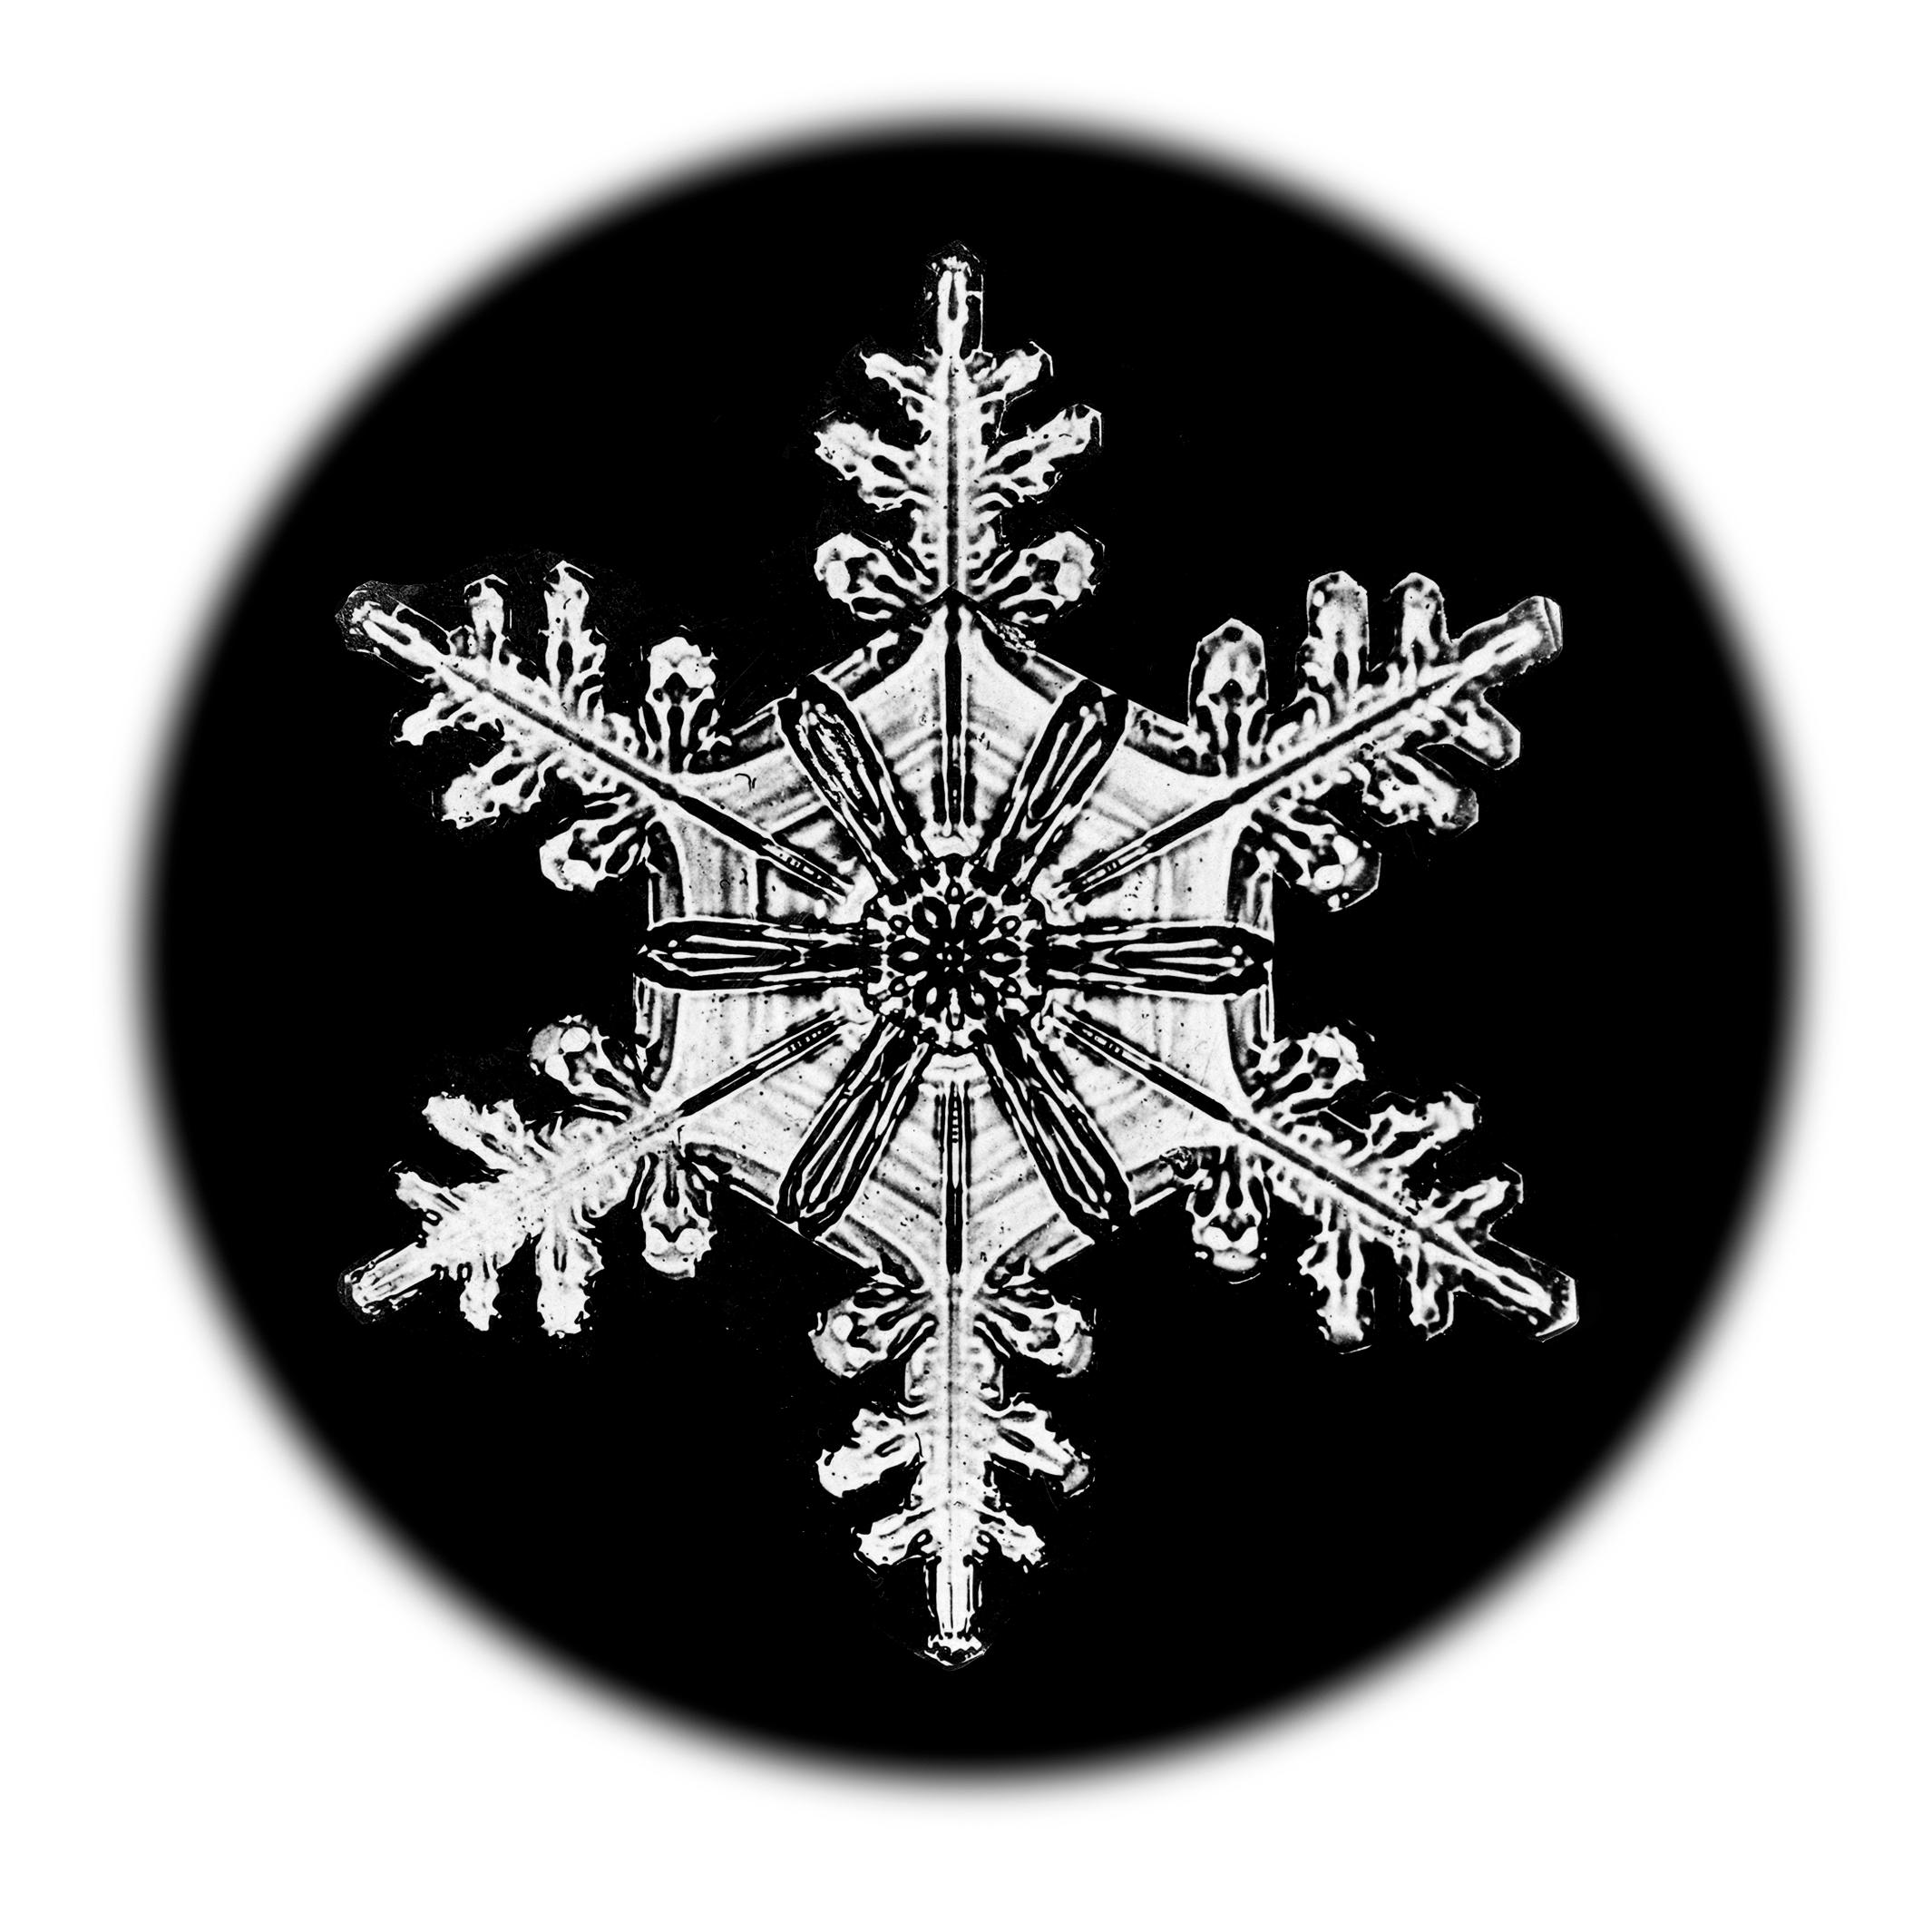 Wilson Bentley Landscape Print - Snowflake Microscopy 3